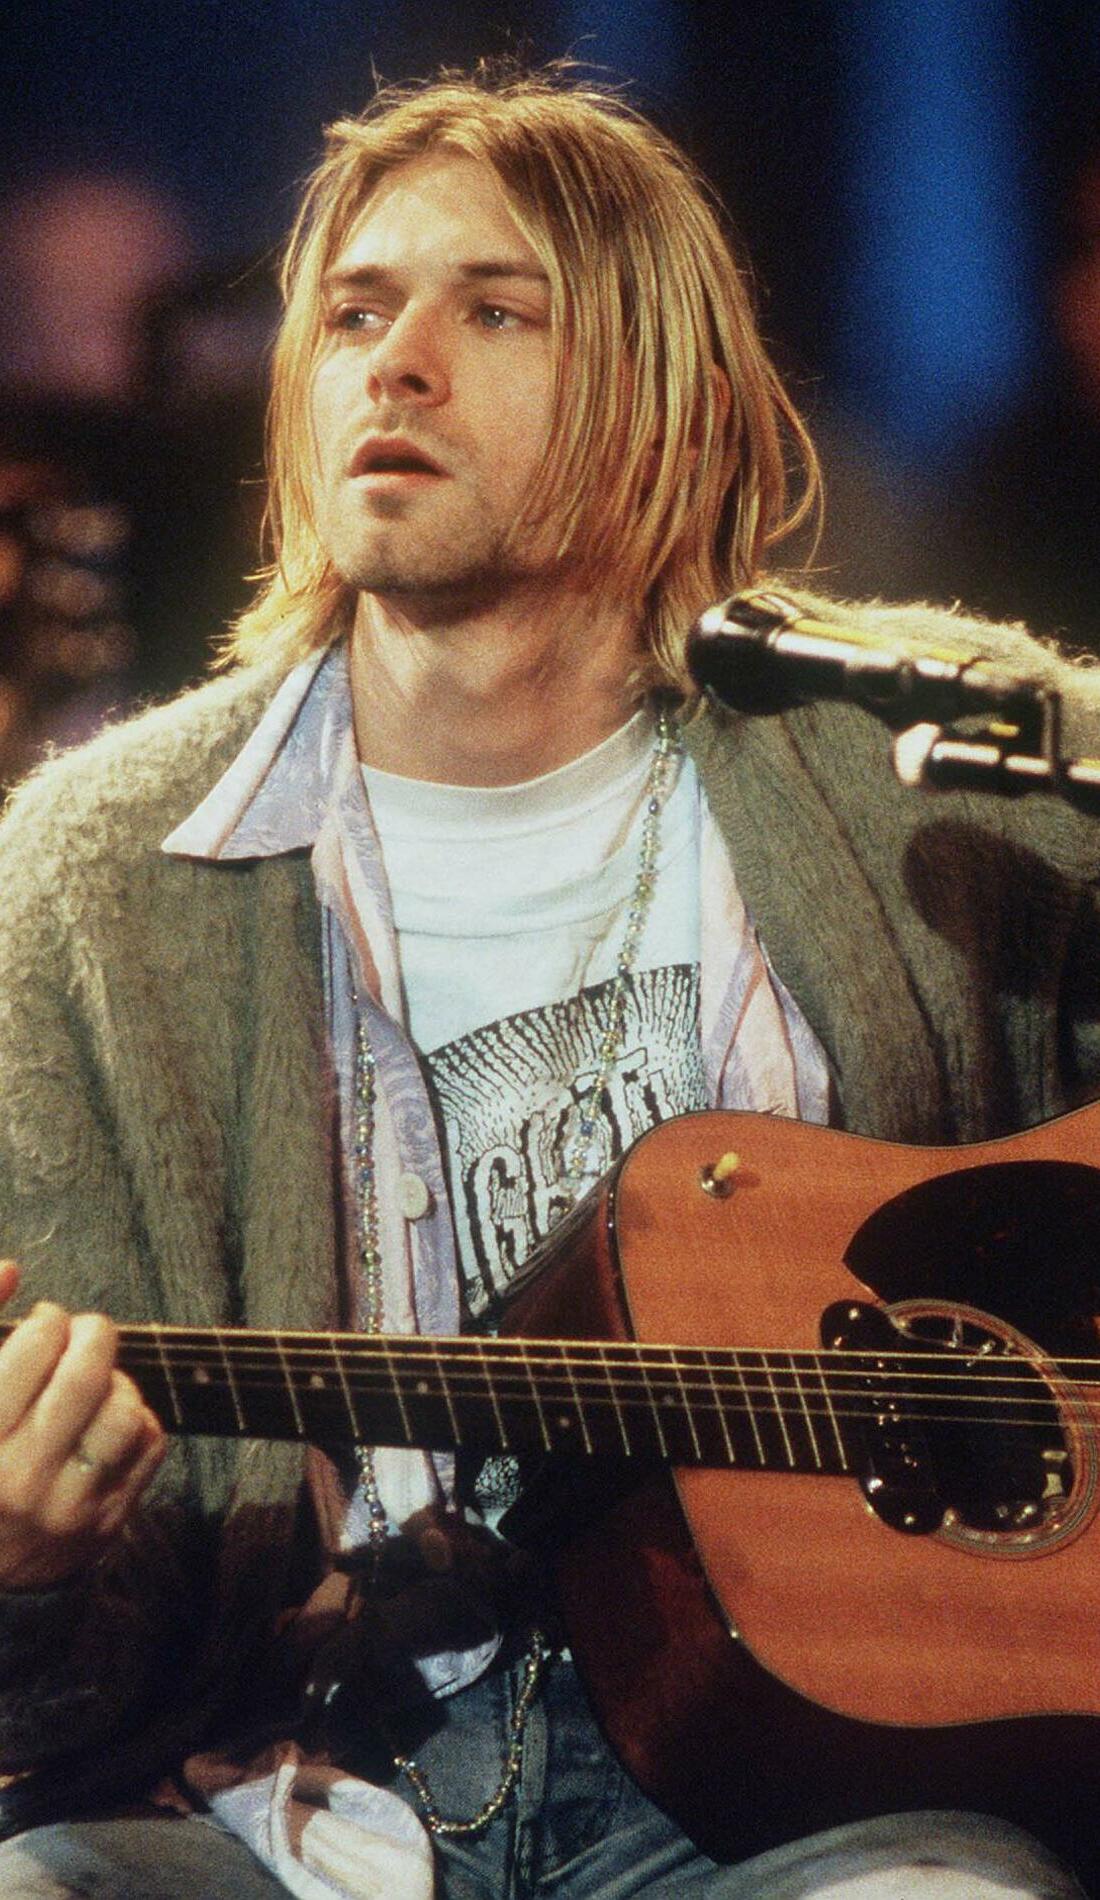 A Kurt Cobain live event